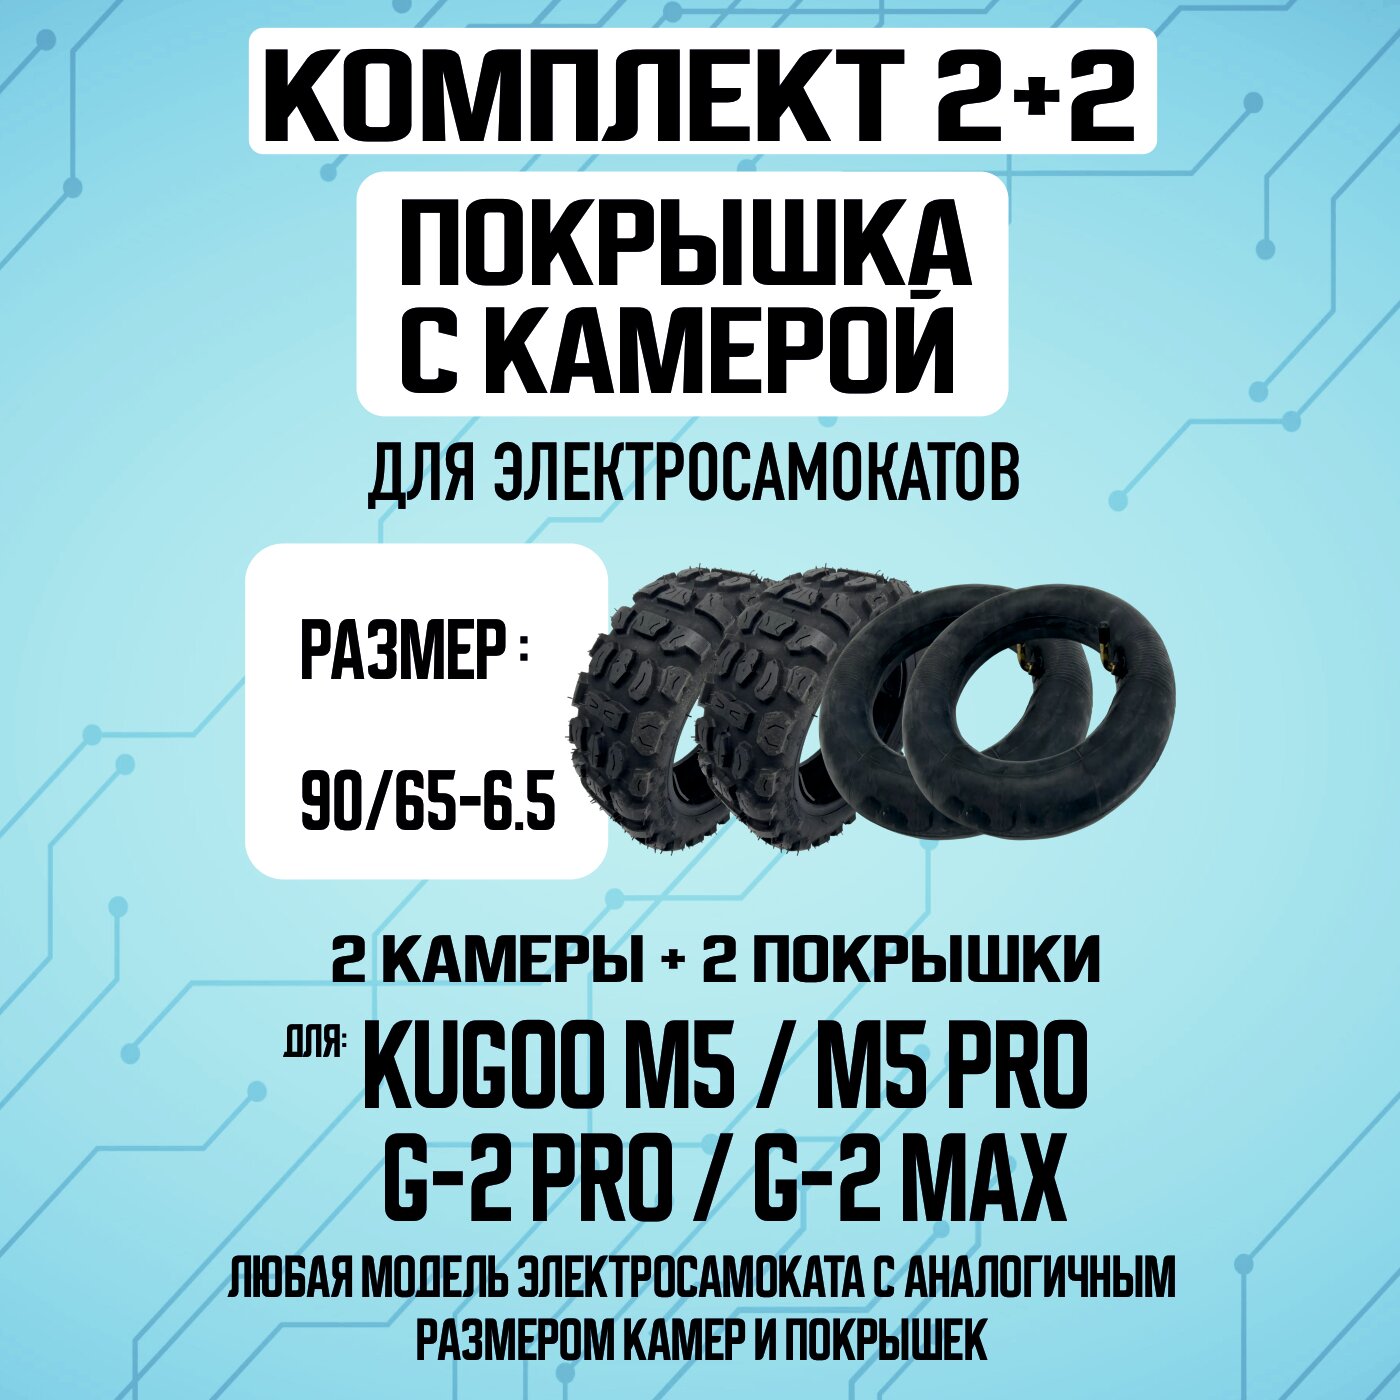 Комплект 1+1. Покрышка для электросамоката Kugoo M5, G-Booster, 2 штуки, + Камера для электросамоката Kugoo M5, G-Booster, 2 штуки